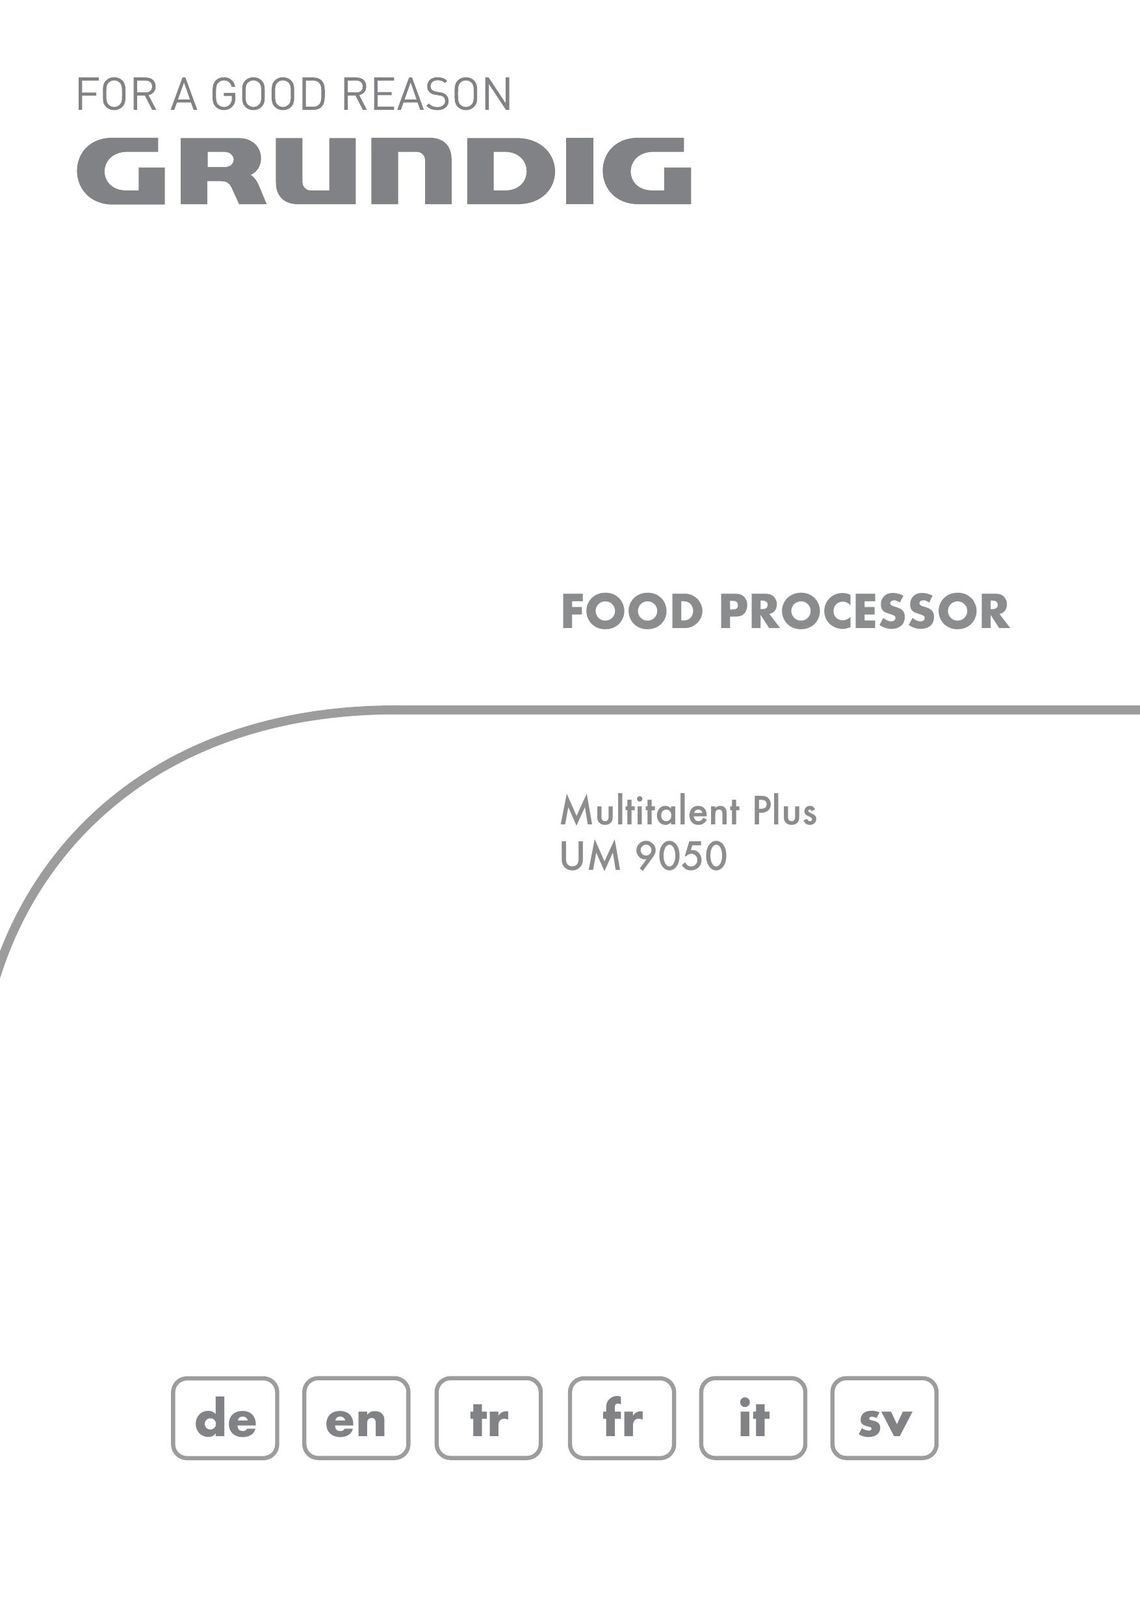 Grundig UM 9050 Food Processor User Manual